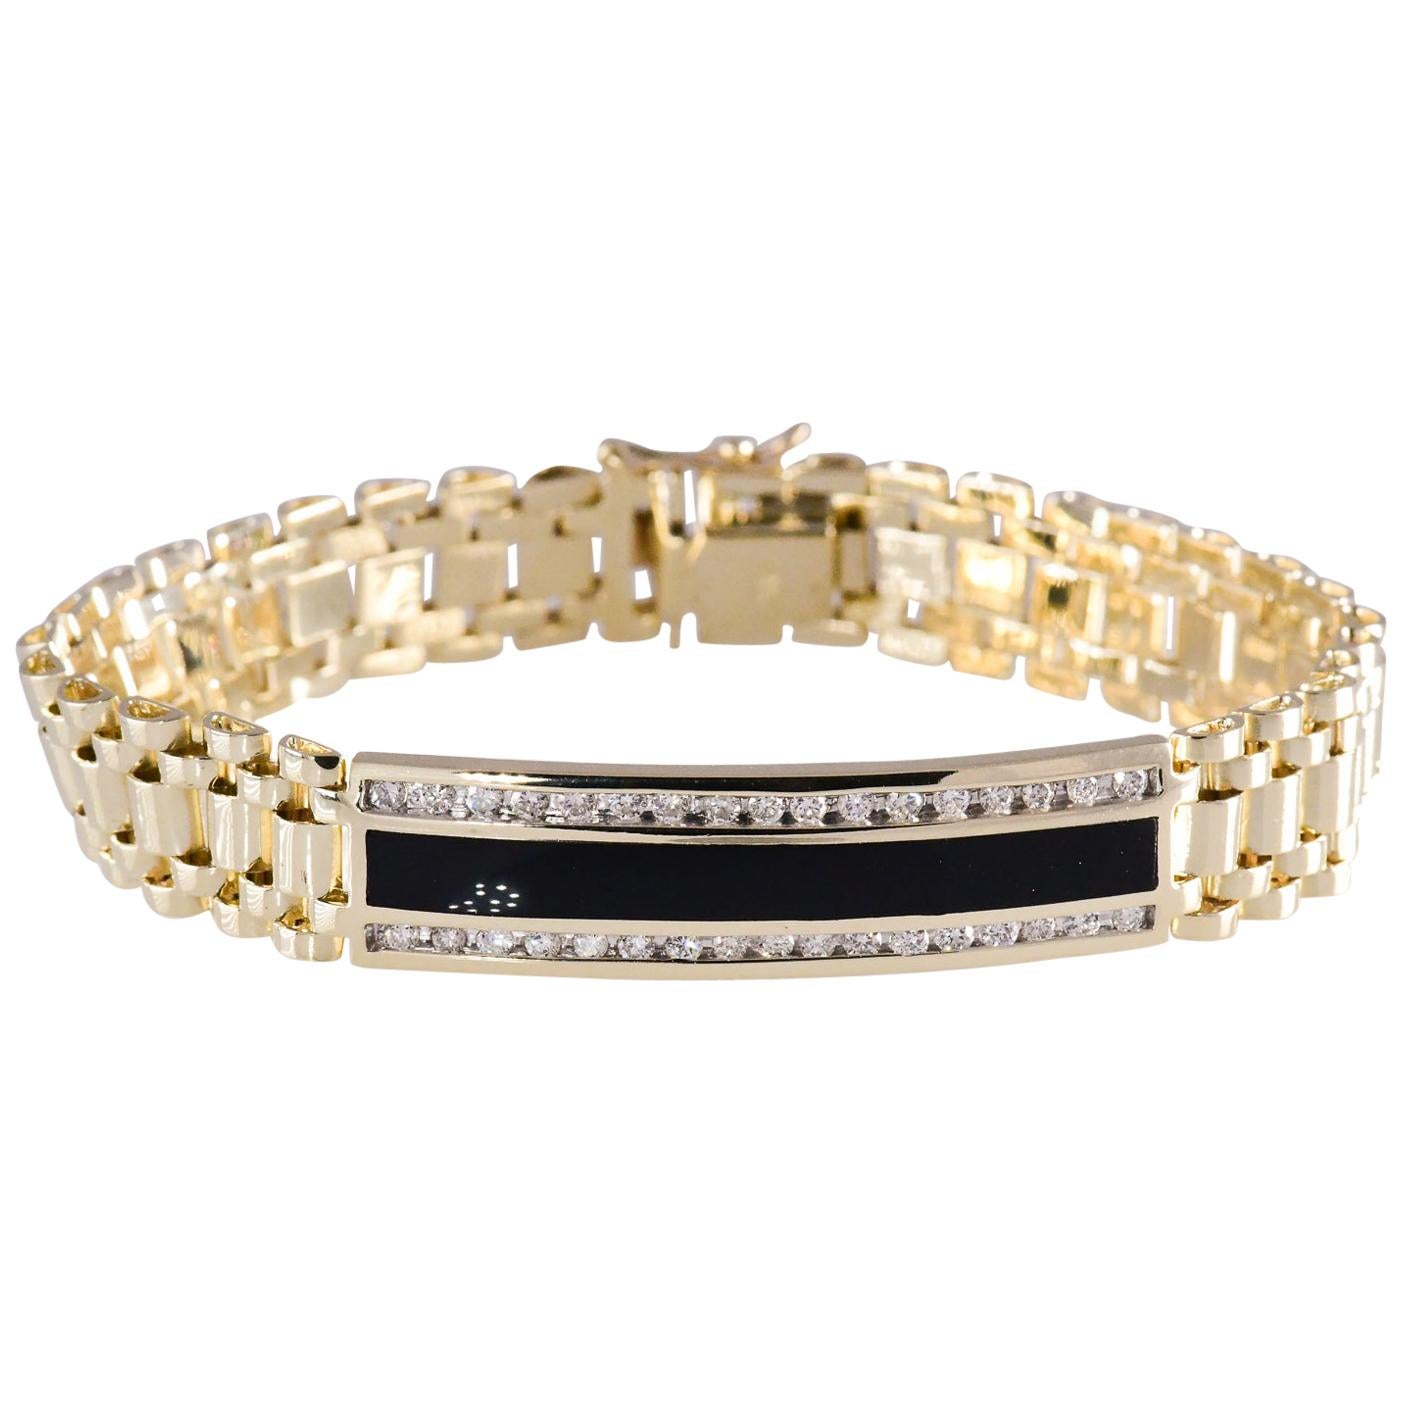 1.0 Carat Diamond and Onyx Bracelet 14 Karat Gold 35.6 Gms Rolex Style Band